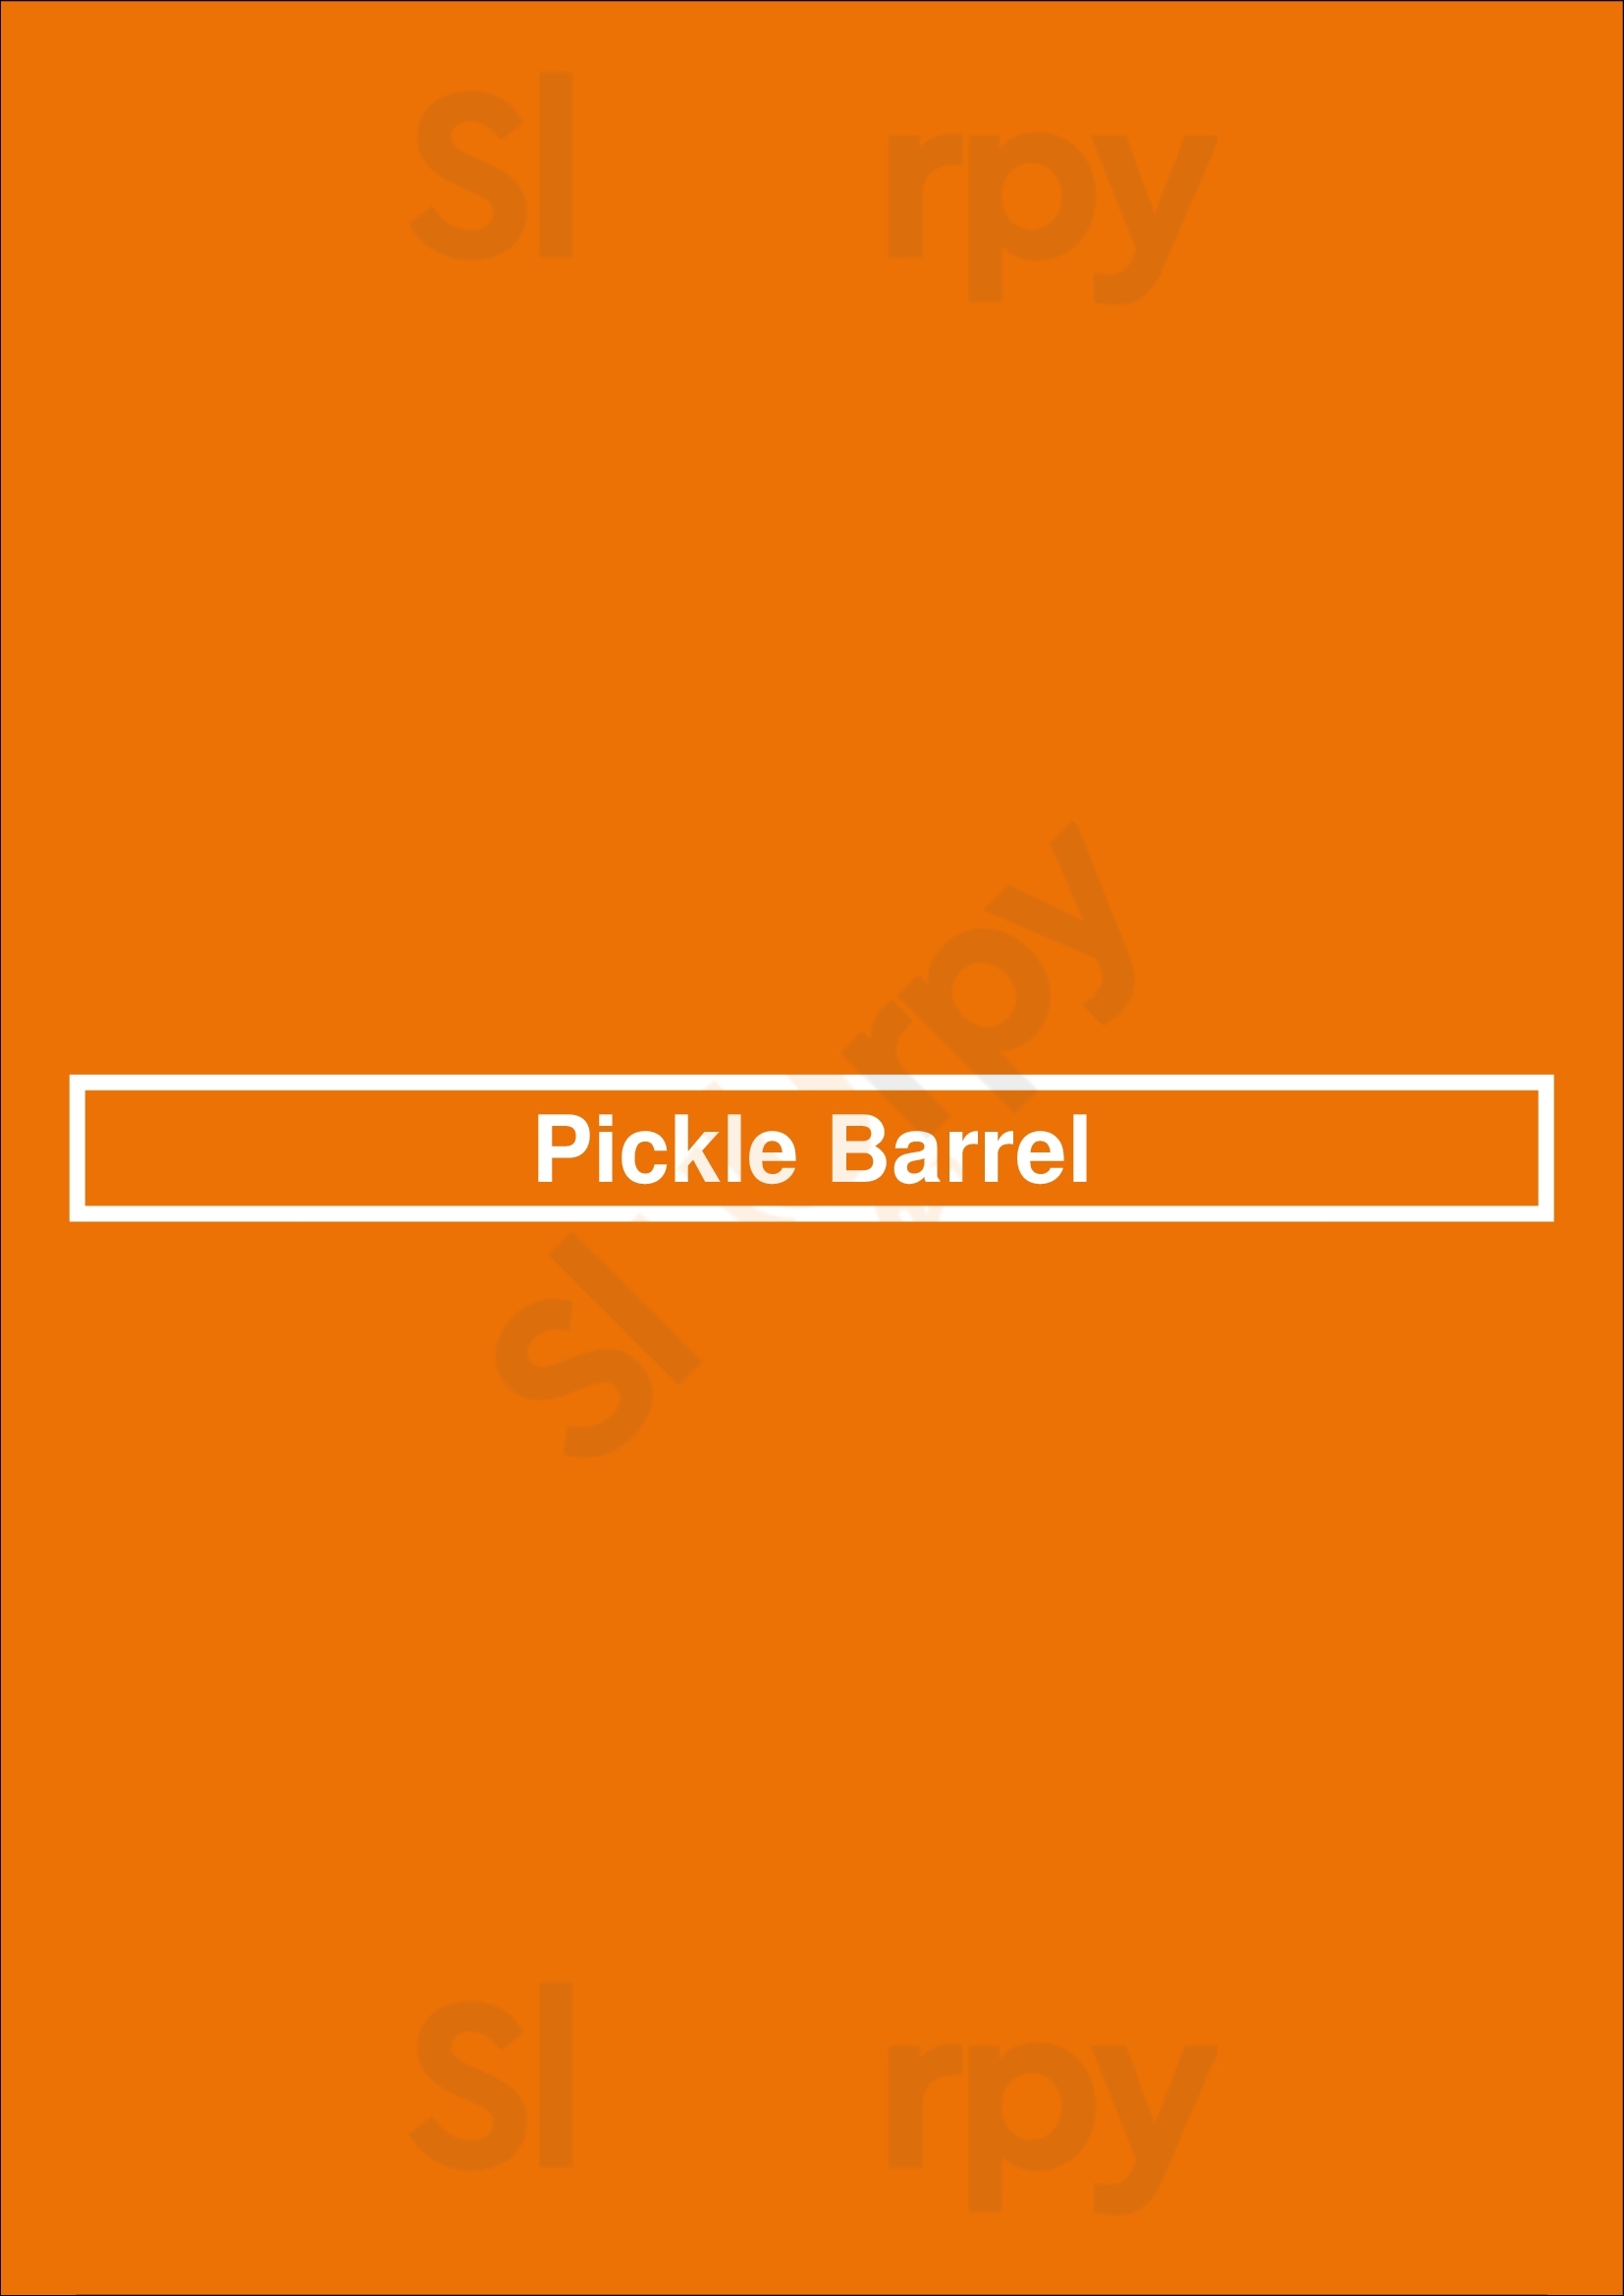 Pickle Barrel Brampton Menu - 1